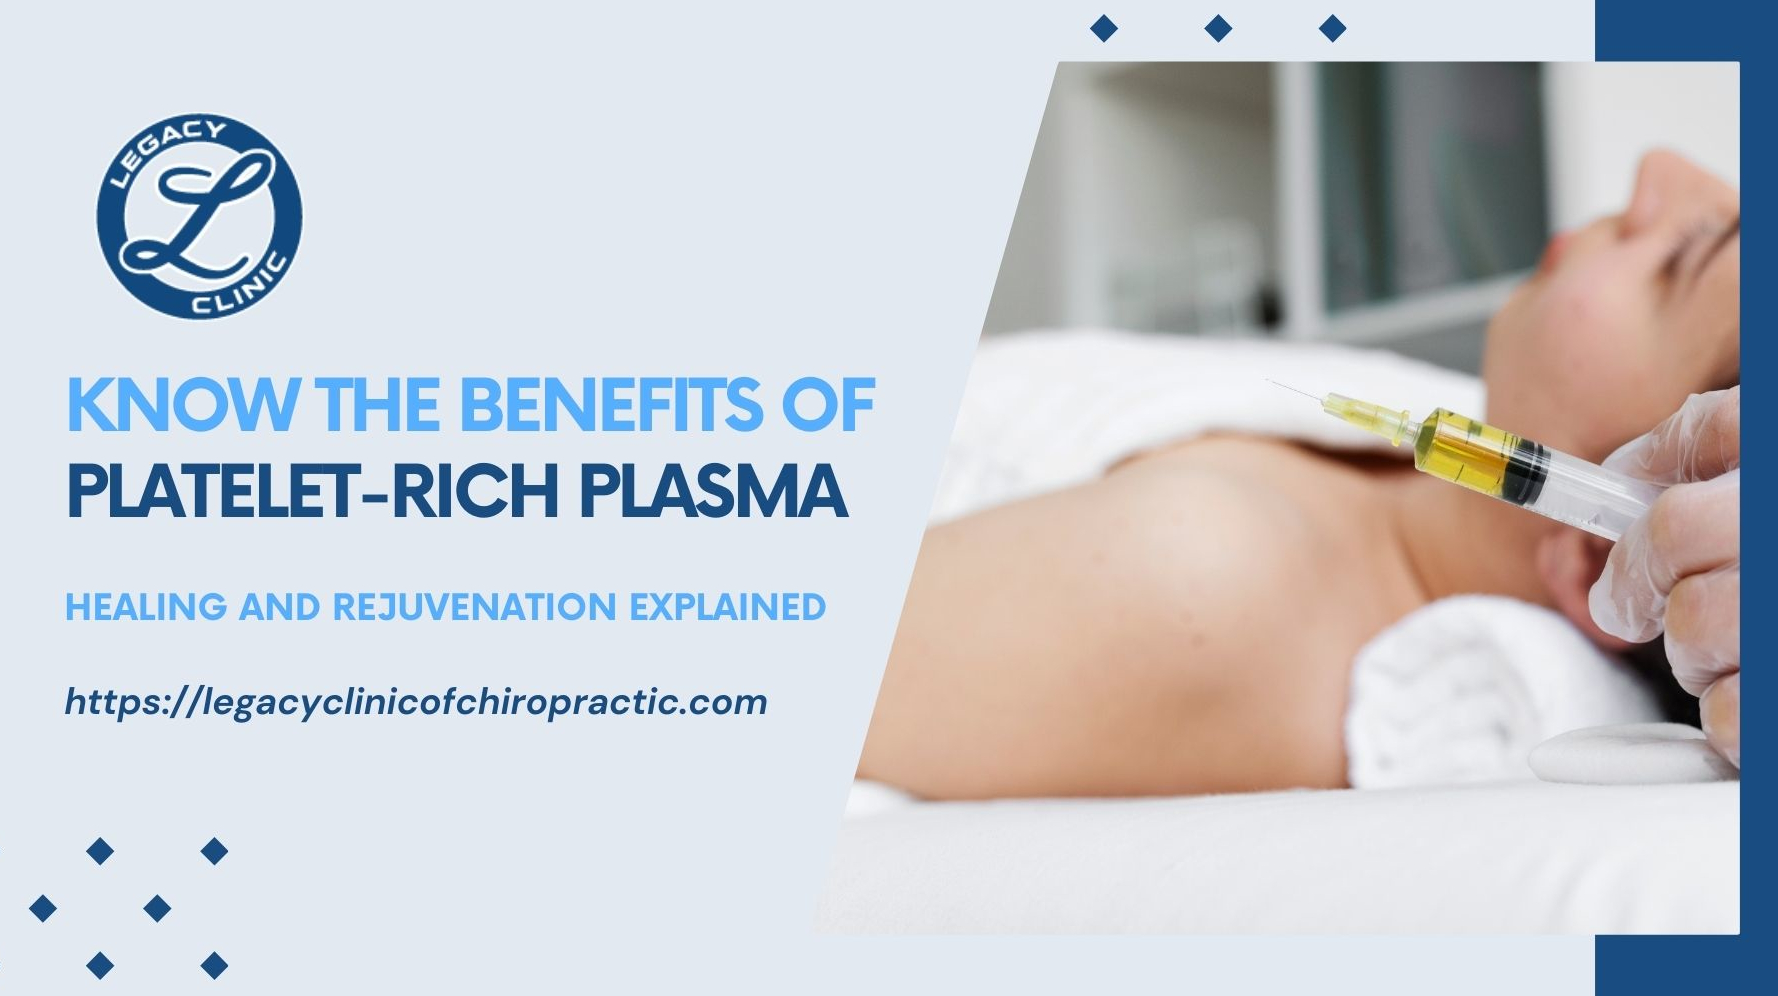 Benefits of Platelet-Rich Plasma